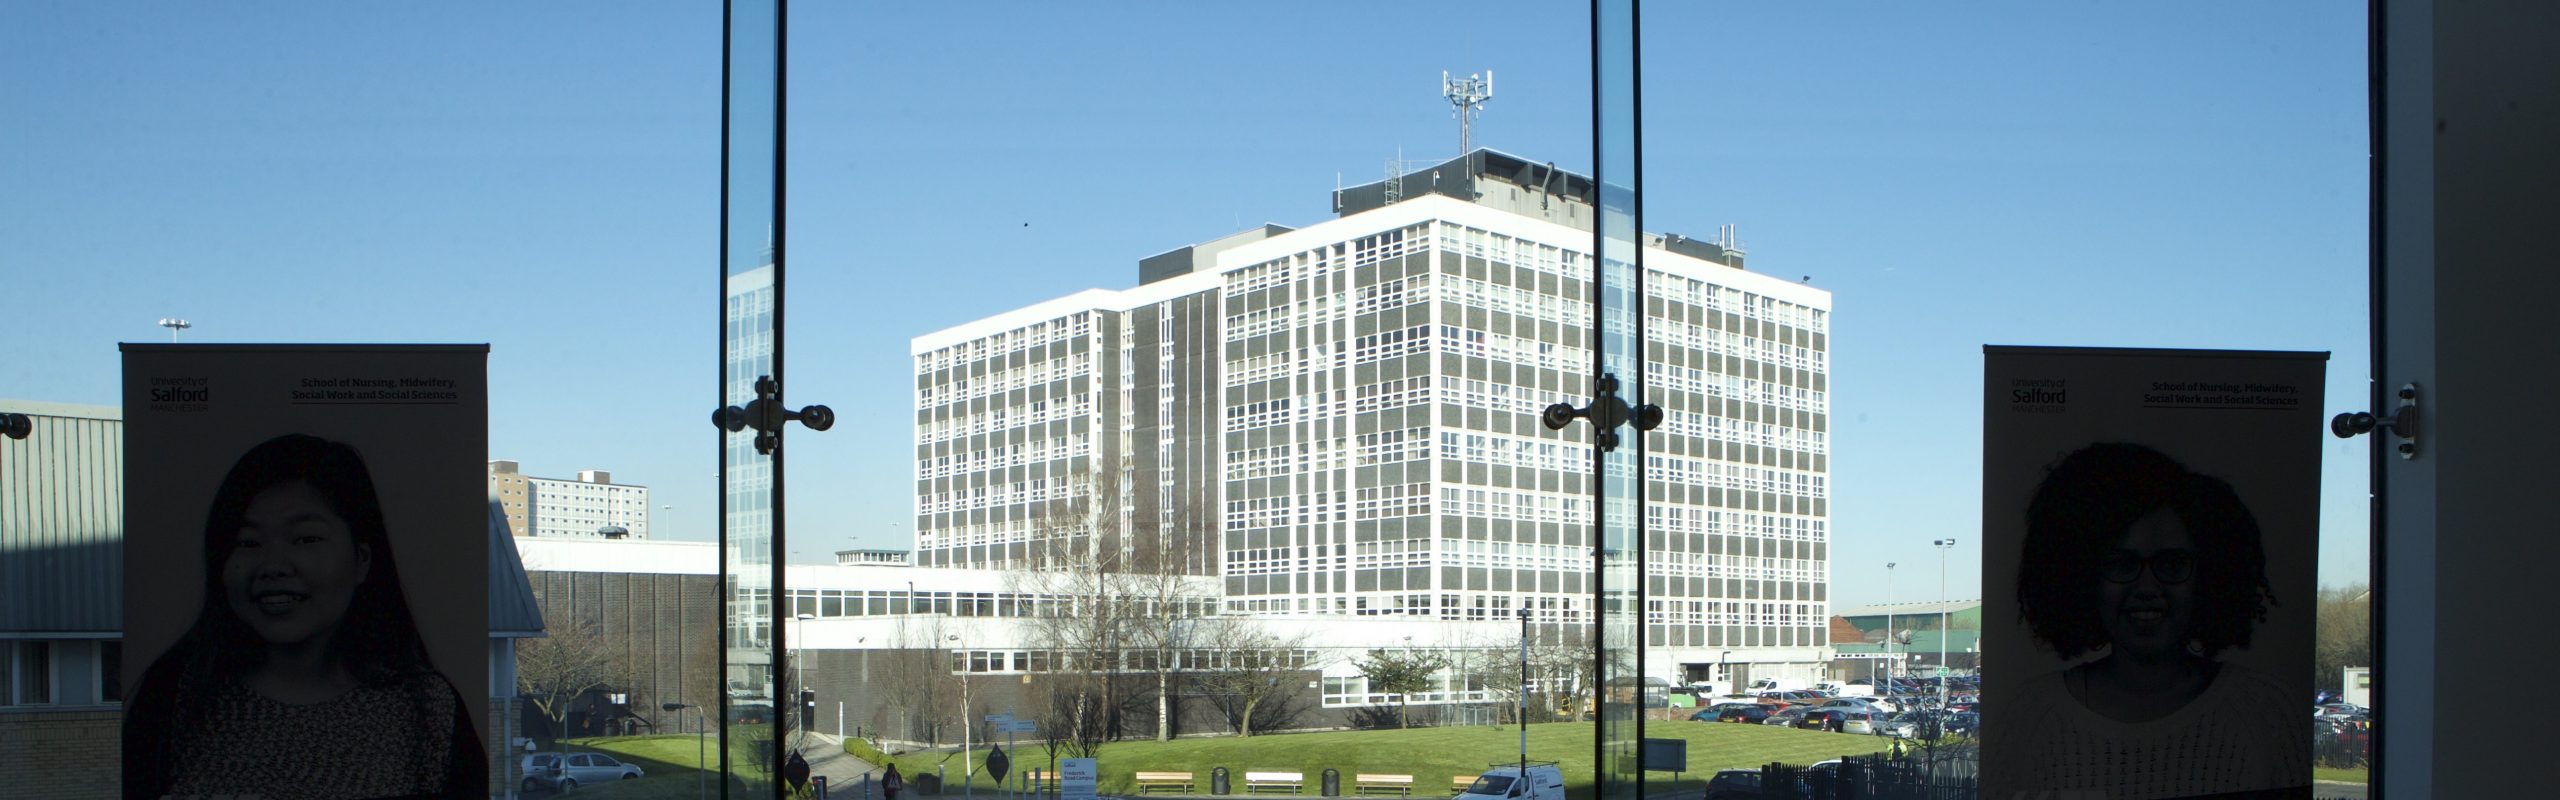 Photo of Allerton Building